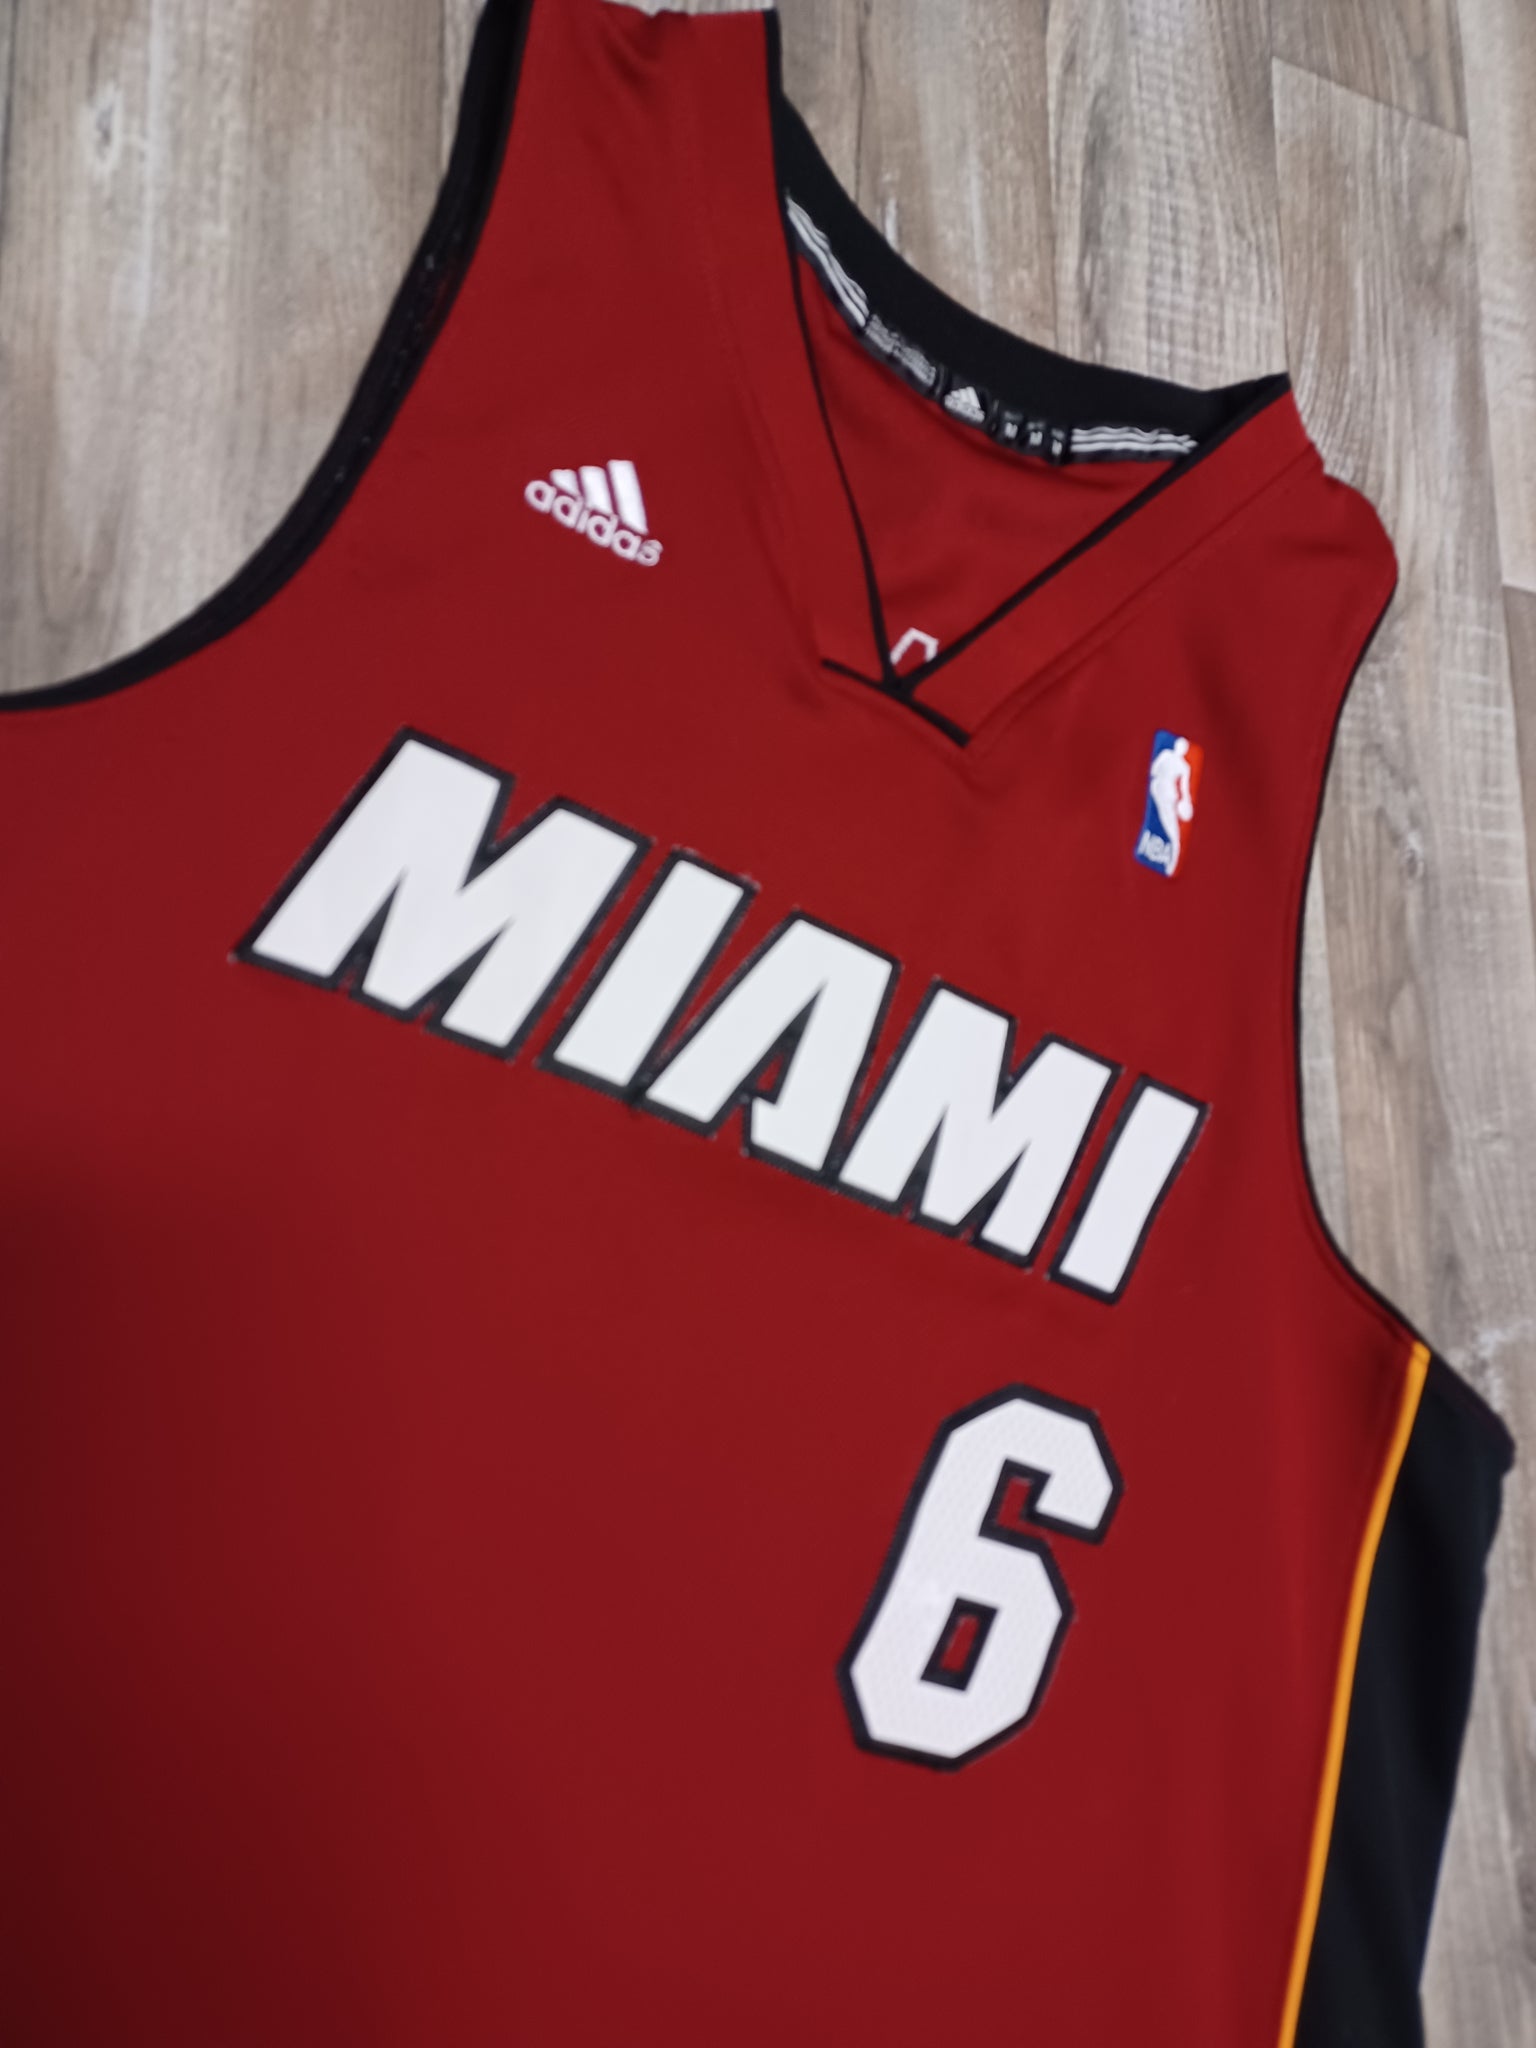 2010 LeBron James Miami Heat Adidas NBA Swingman Jersey Size